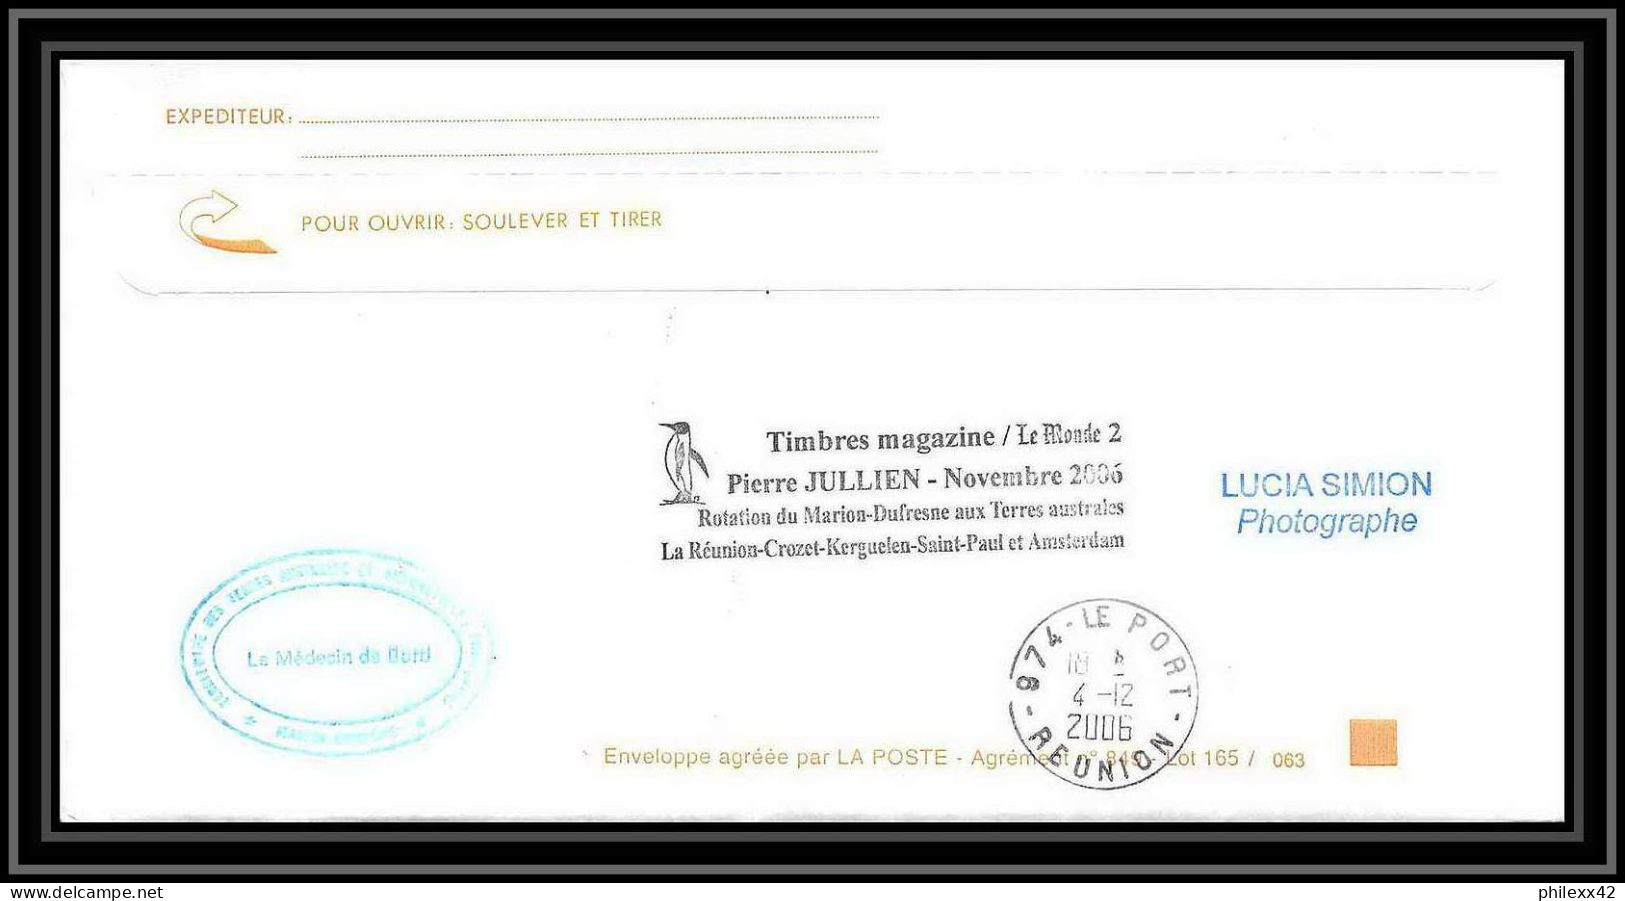 2618 ANTARCTIC Terres Australes TAAF Lettre Cover Dufresne 2 Signé Signed Op 2006/3 N°442 23/11/2006 St Paul - Antarctische Expedities